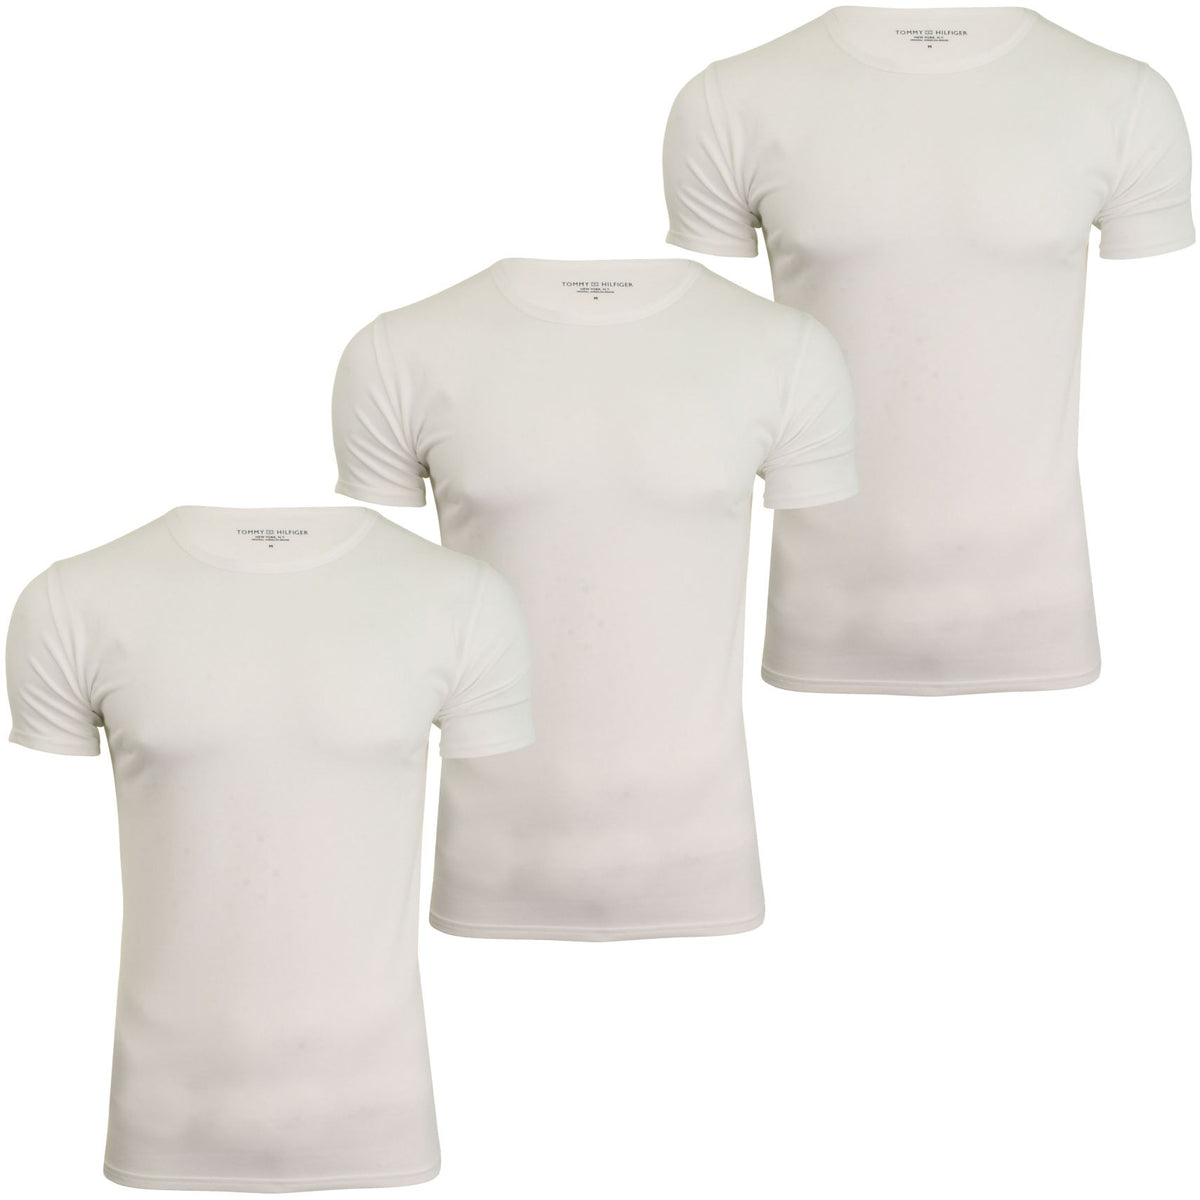 Tommy Hilfiger Men's Crew Neck Loungewear T-Shirt - Short Sleeved (3-Pack), 01, 2S87905187, White